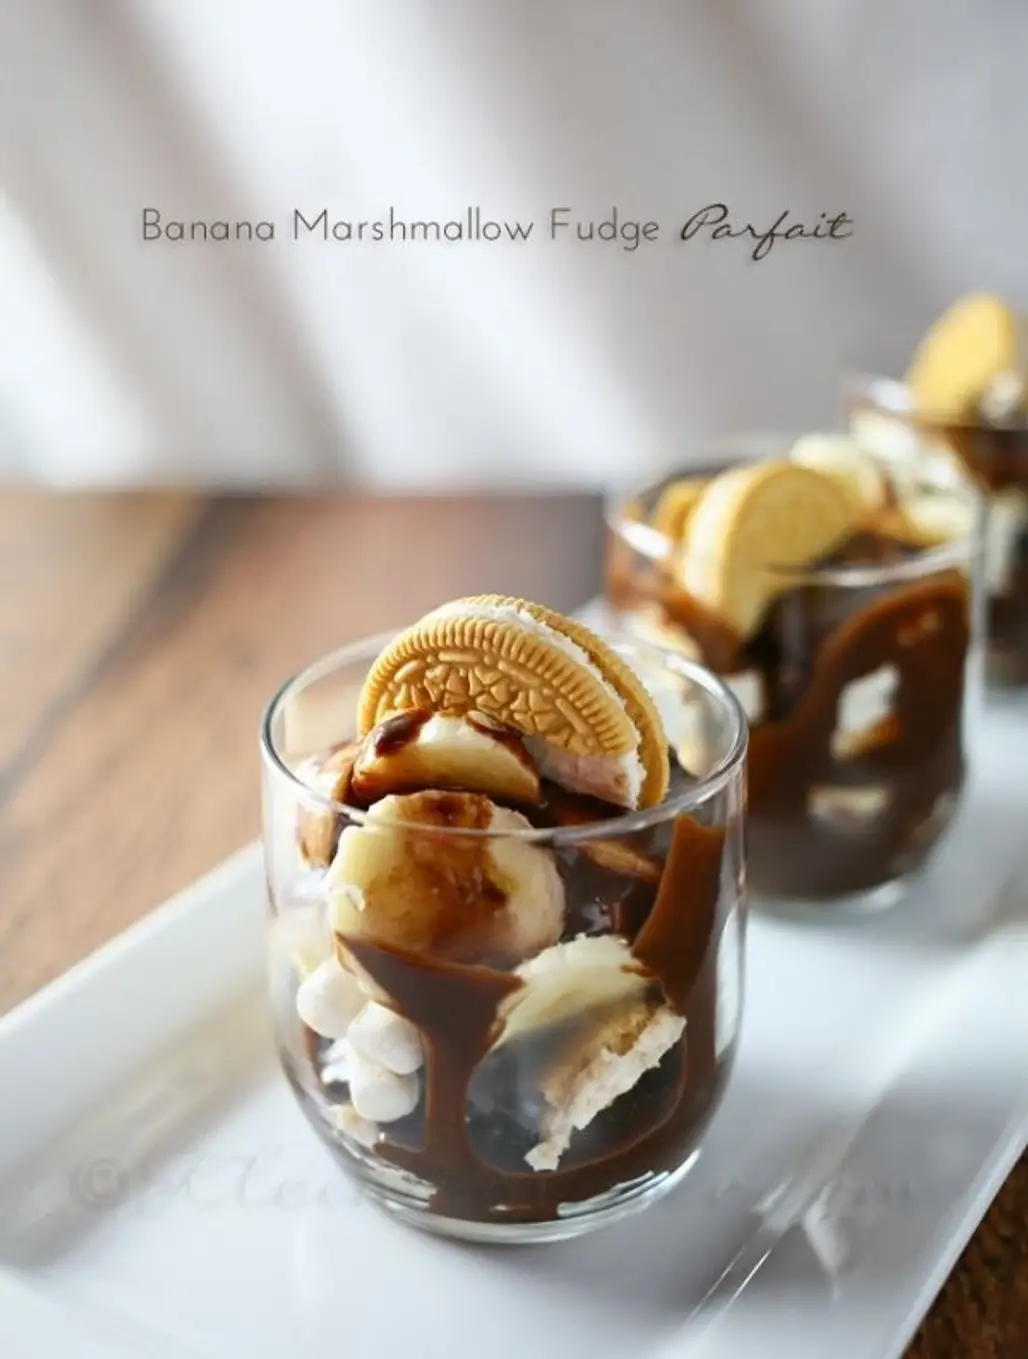 Banana Marshmallow Fudge Parfait